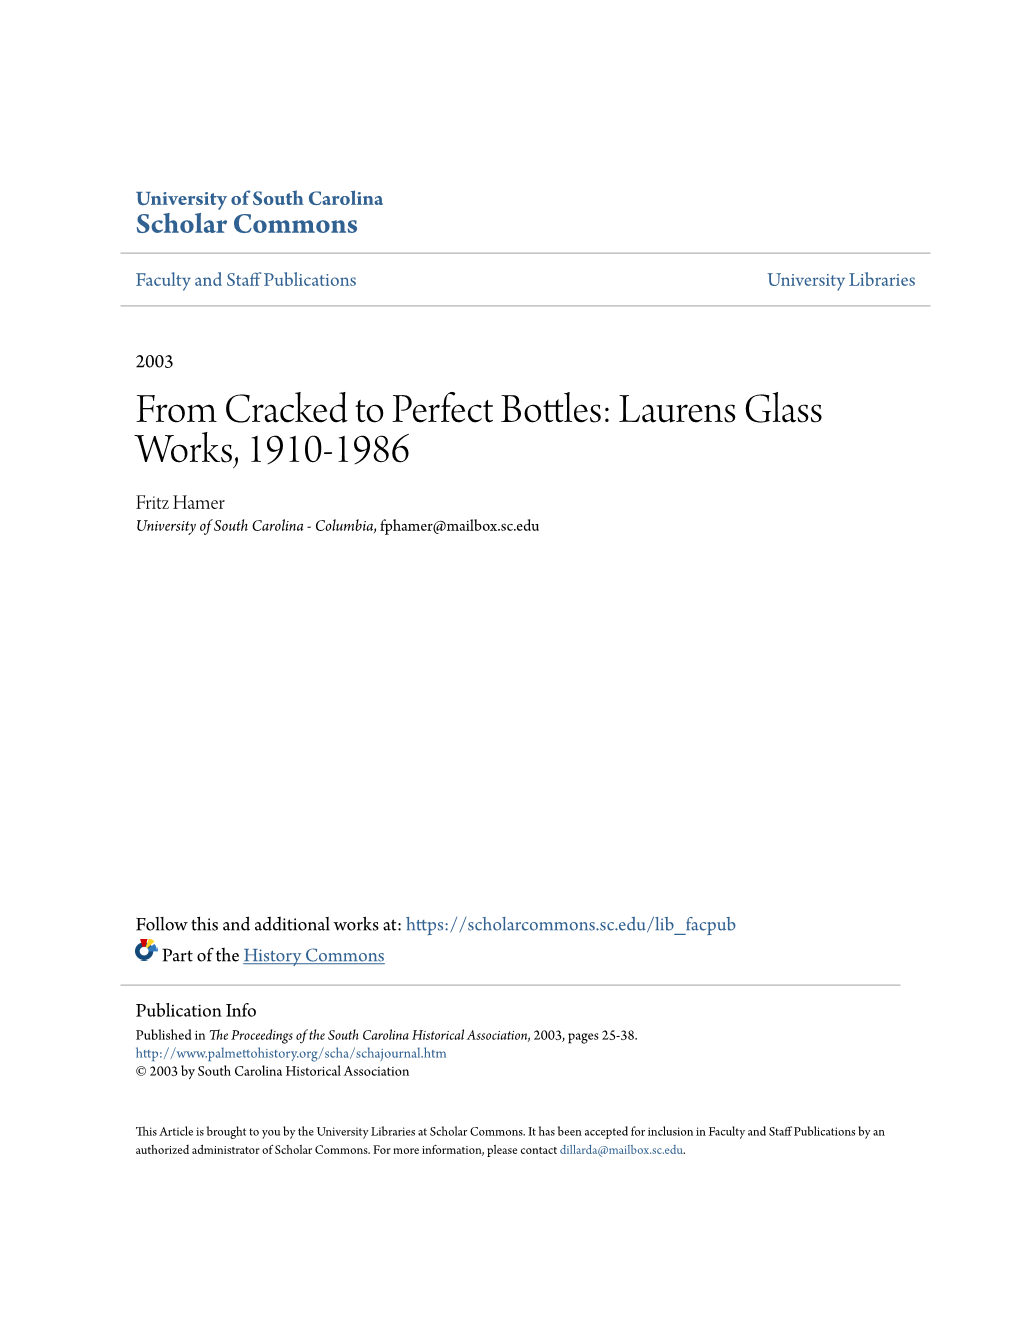 Laurens Glass Works, 1910-1986 Fritz Hamer University of South Carolina - Columbia, Fphamer@Mailbox.Sc.Edu